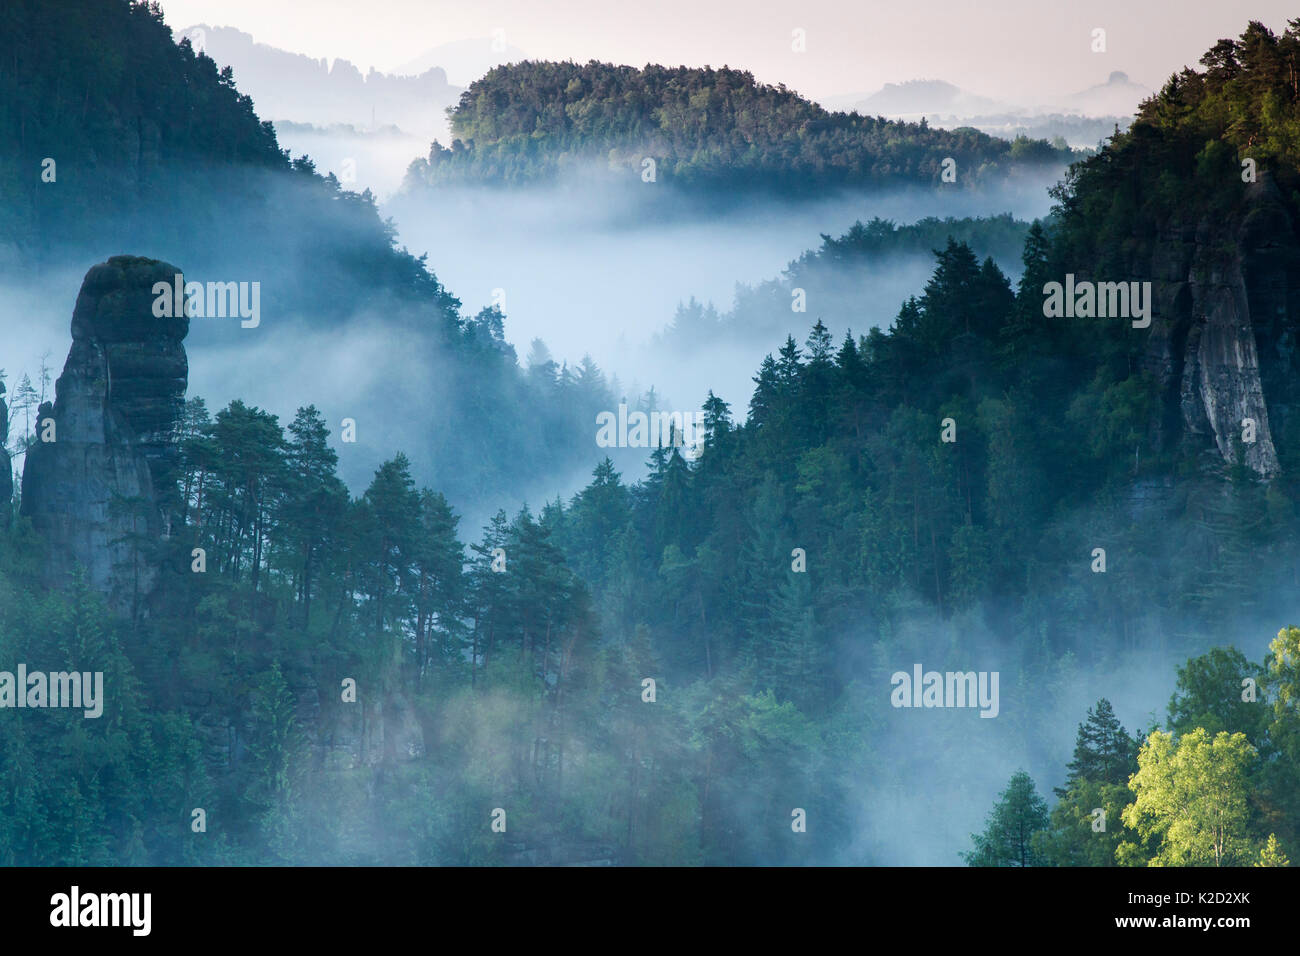 Morning mist over forest and sandstone rock formations, Sachsische Schweiz / Saxon Switzerland National Park, Germany, June 2010 Stock Photo